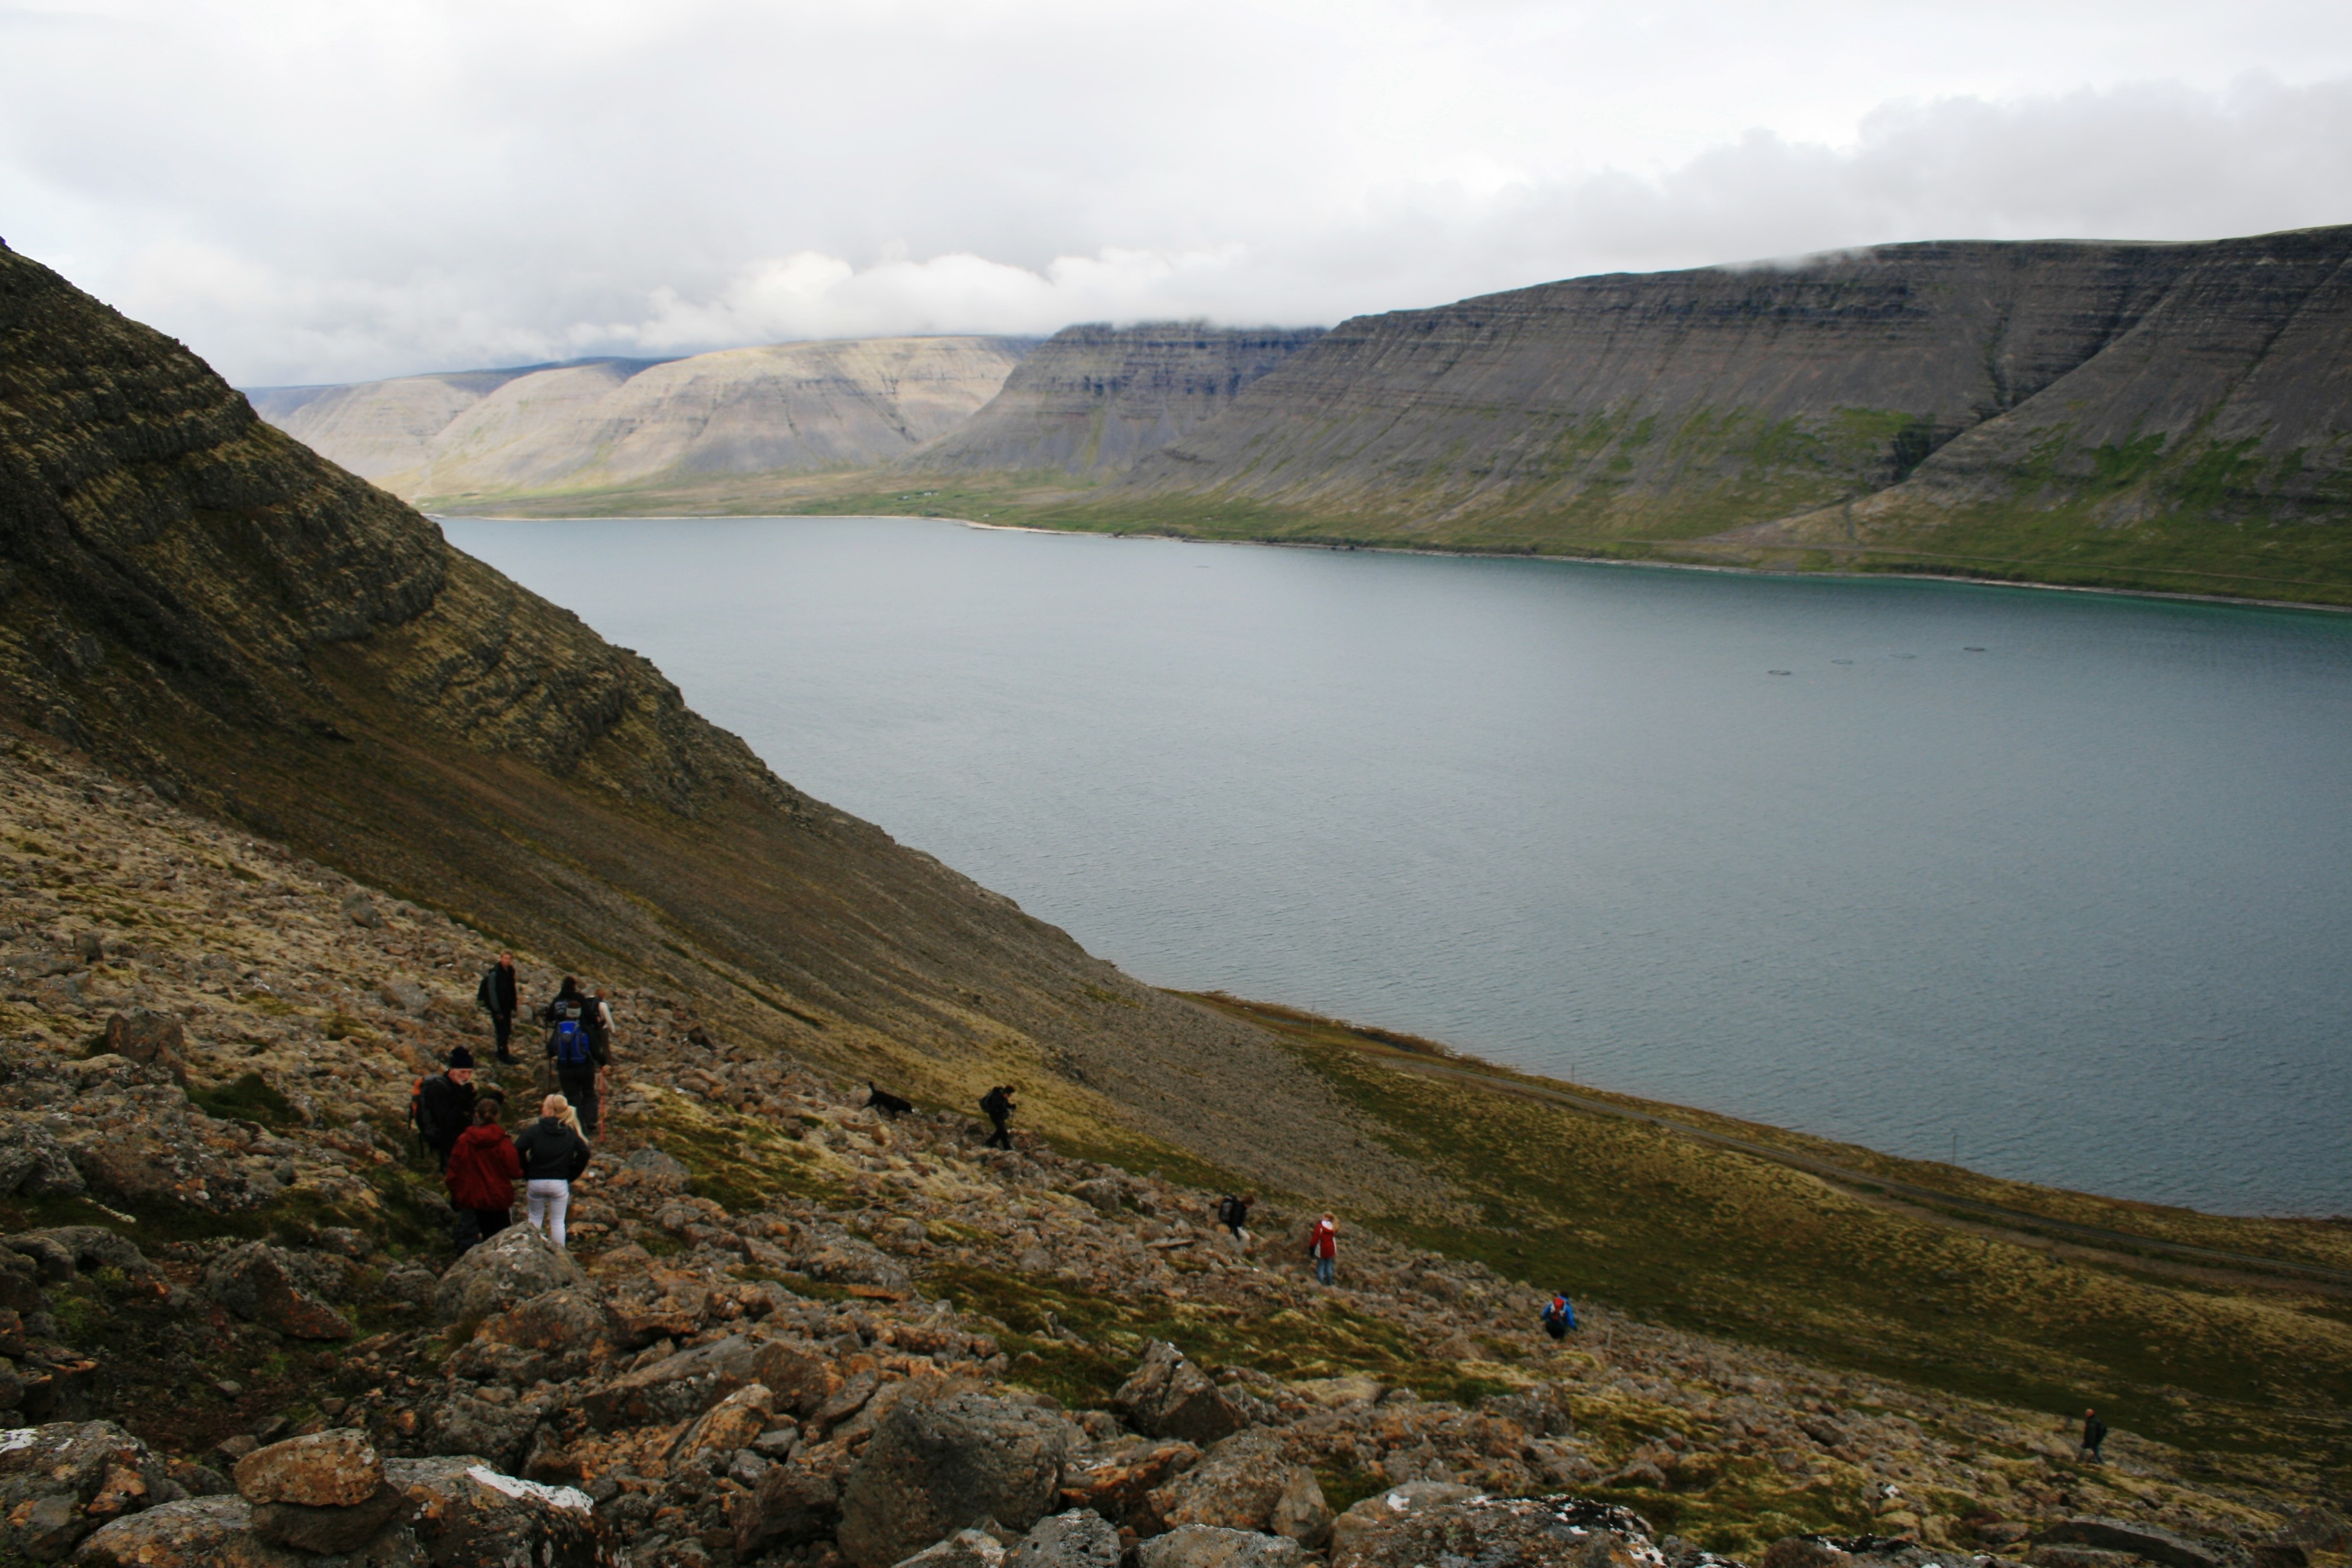 When hiking between the two western fjords of Patreksfjörður and Tálknafjörður, you are guaranteed stunning views of steep mountains rising above the ocean.